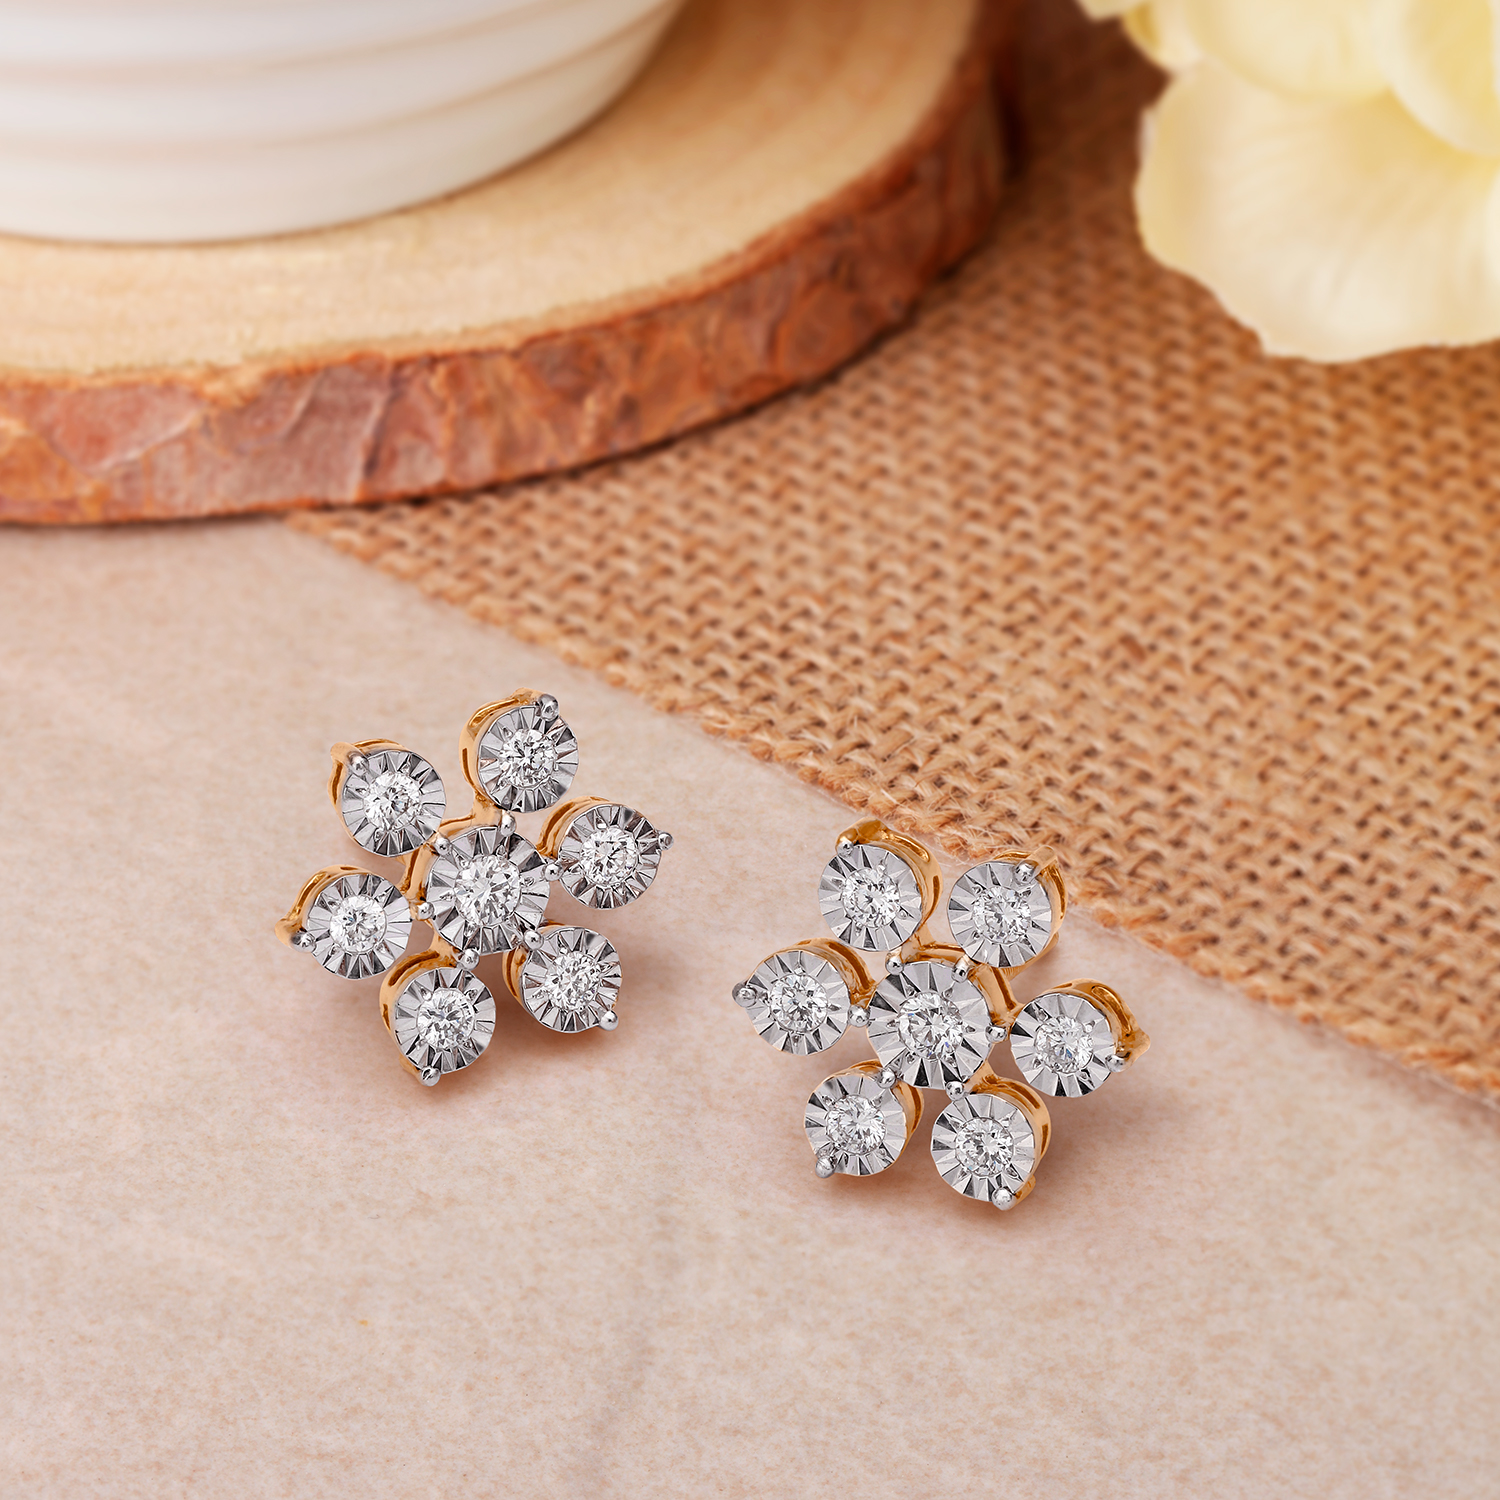 18K South Indian 7 Stone Diamond Studs Earrings Set Online